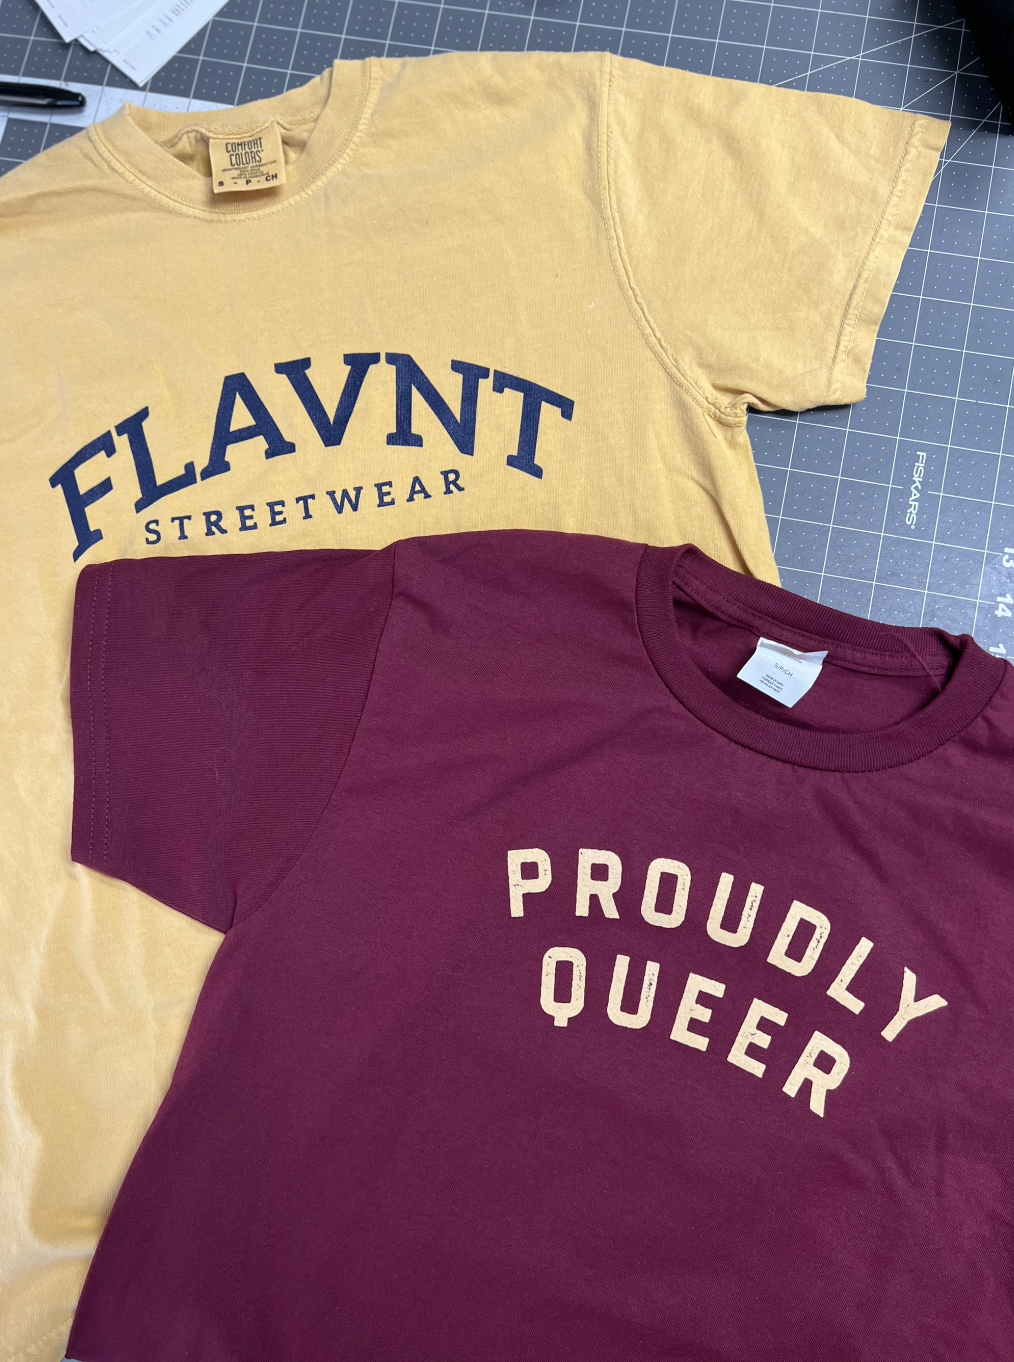 Flavnt Streetwear 2022 Logo T-Shirt